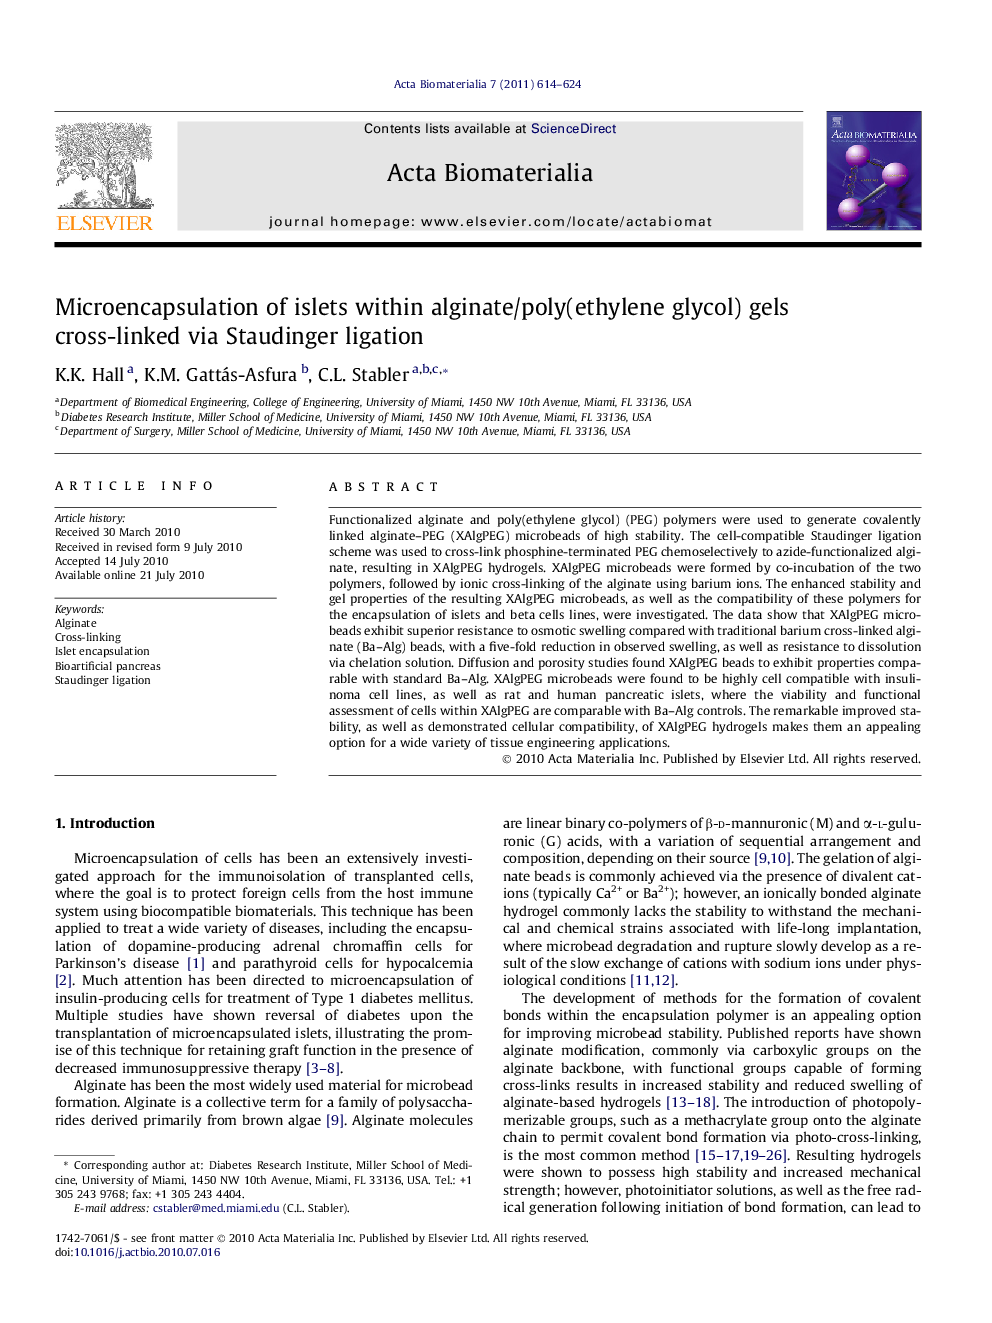 Microencapsulation of islets within alginate/poly(ethylene glycol) gels cross-linked via Staudinger ligation